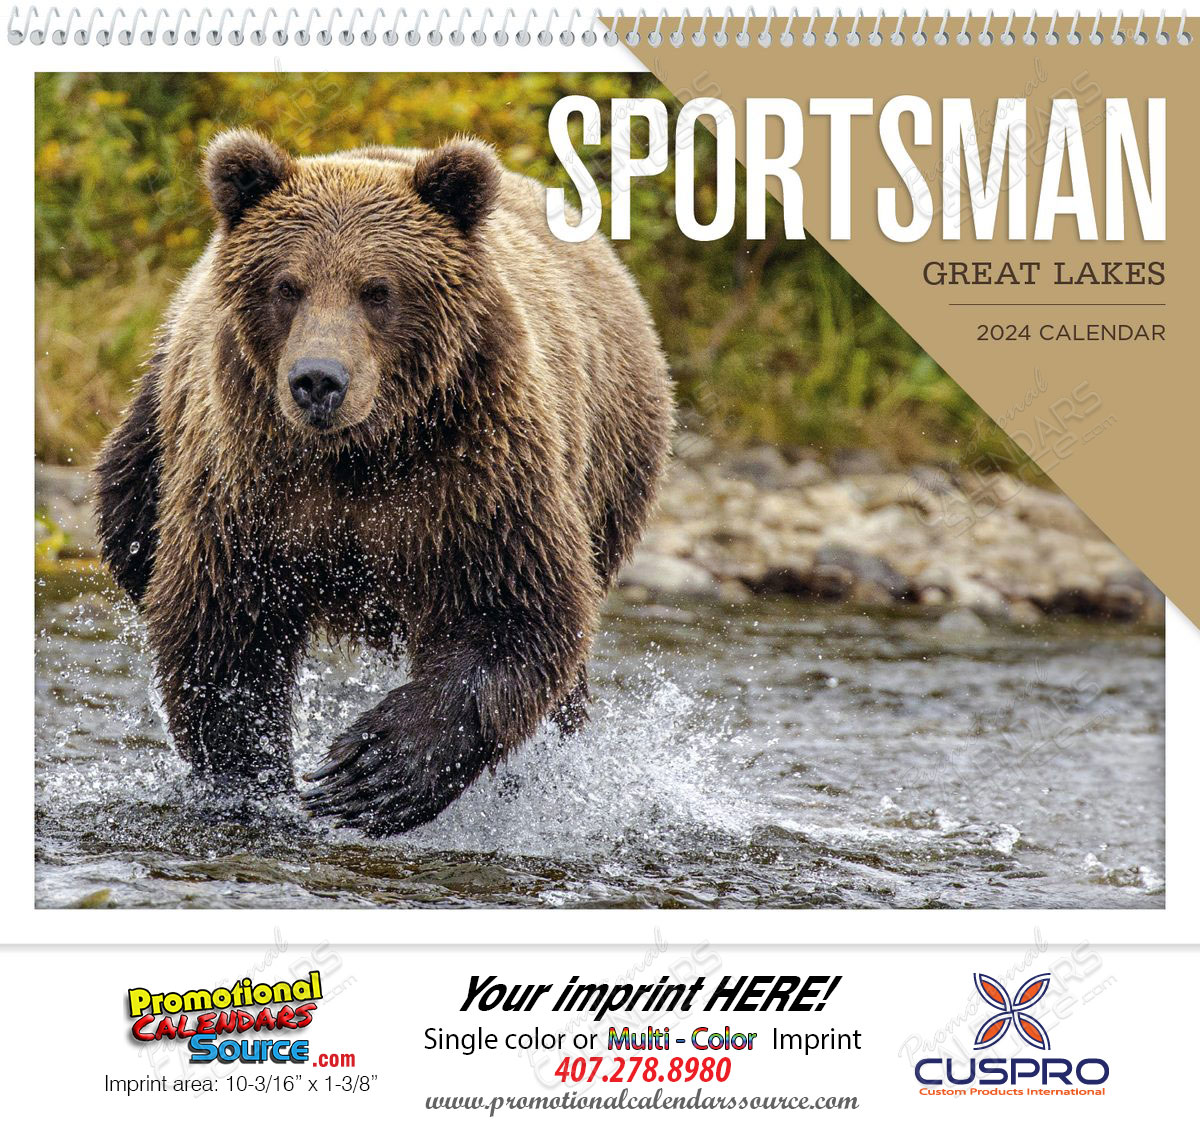 Great Lakes Sportsman Promotional Calendar 